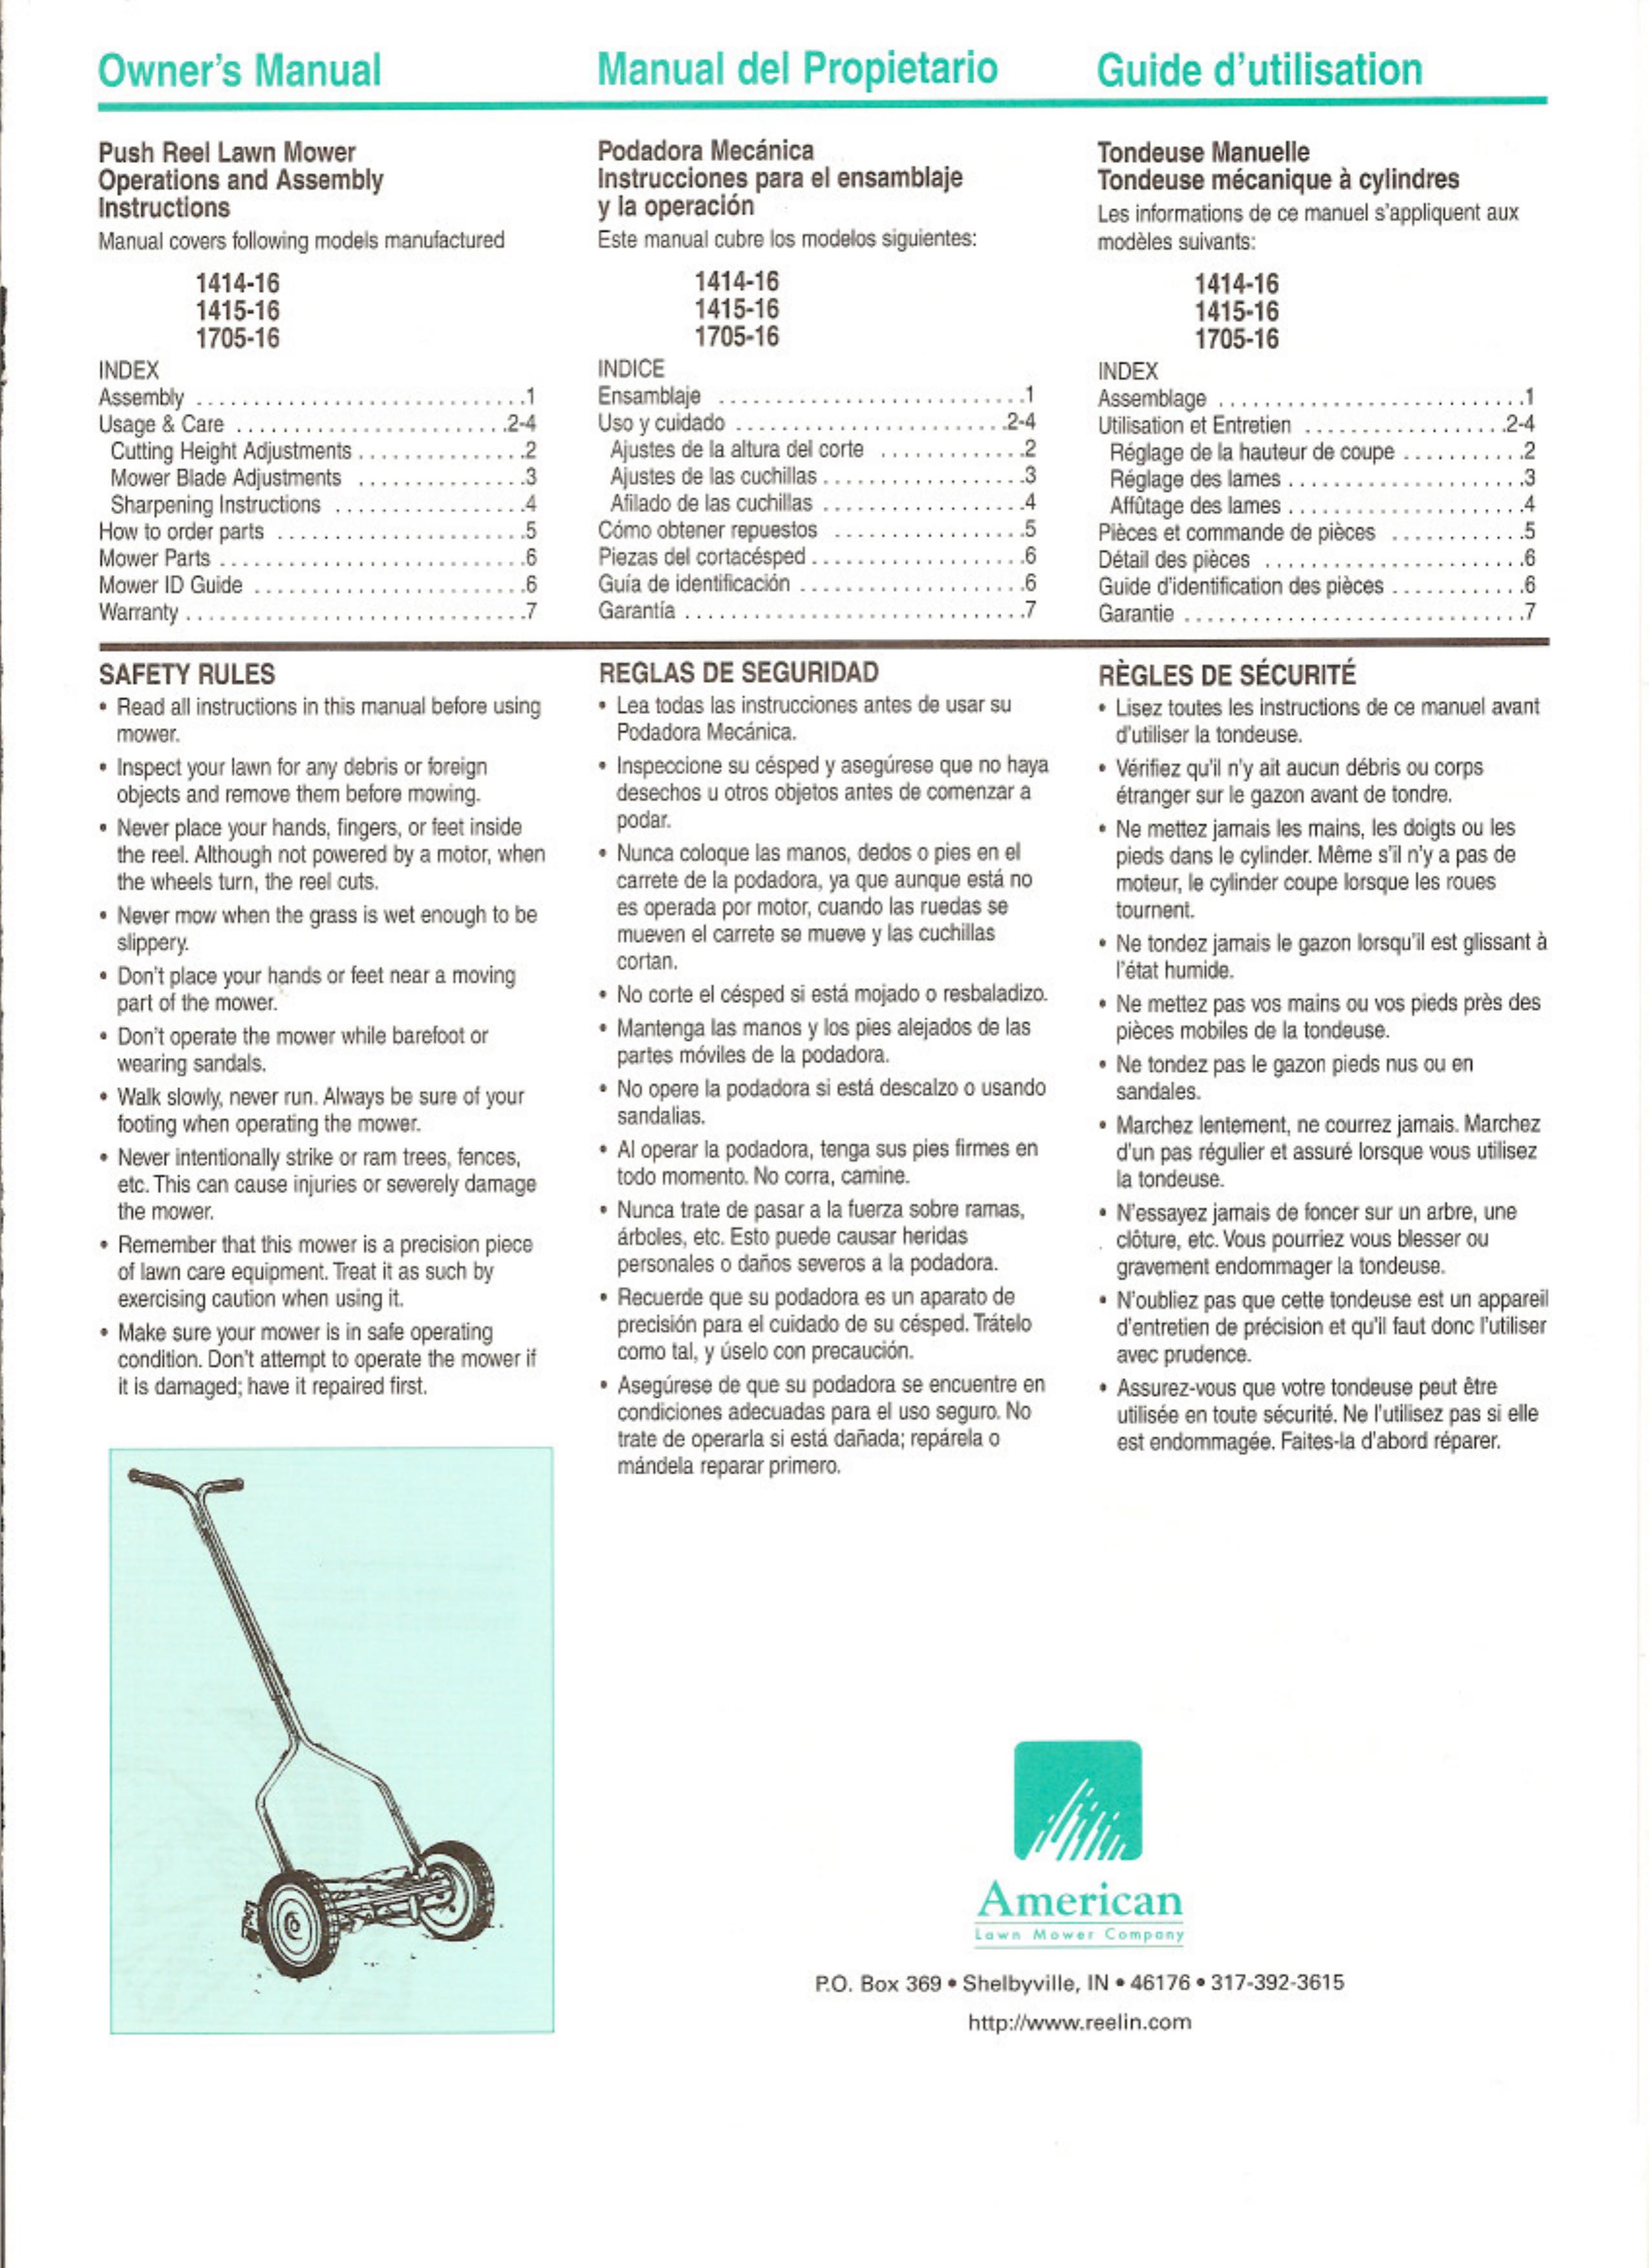 American Lawn Mower Co. 1414-16 Lawn Mower User Manual